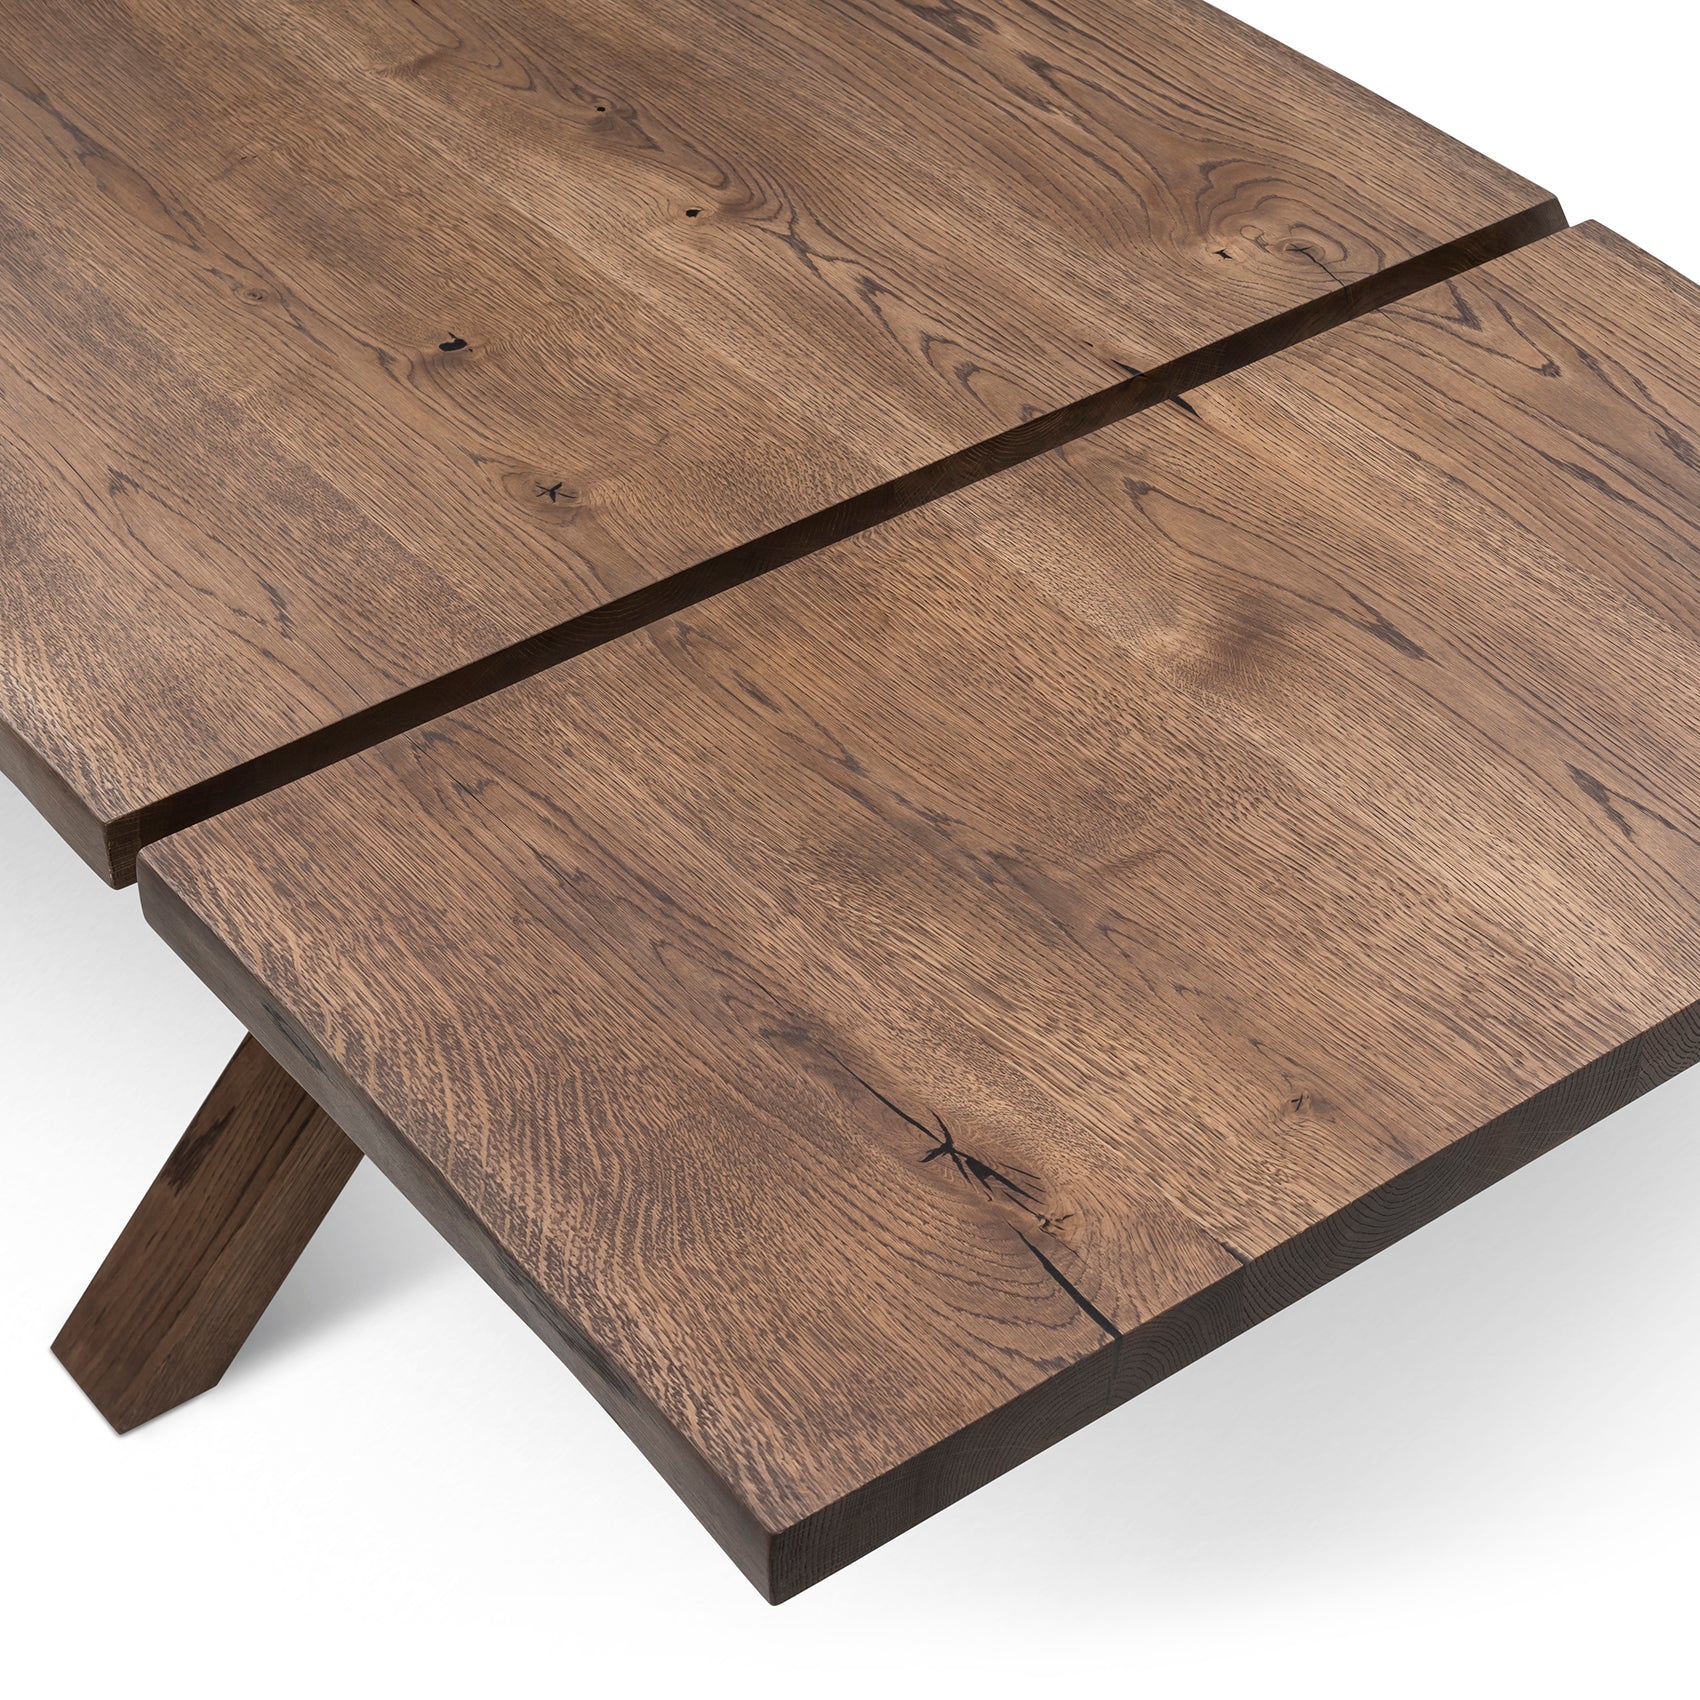 oak extending table top